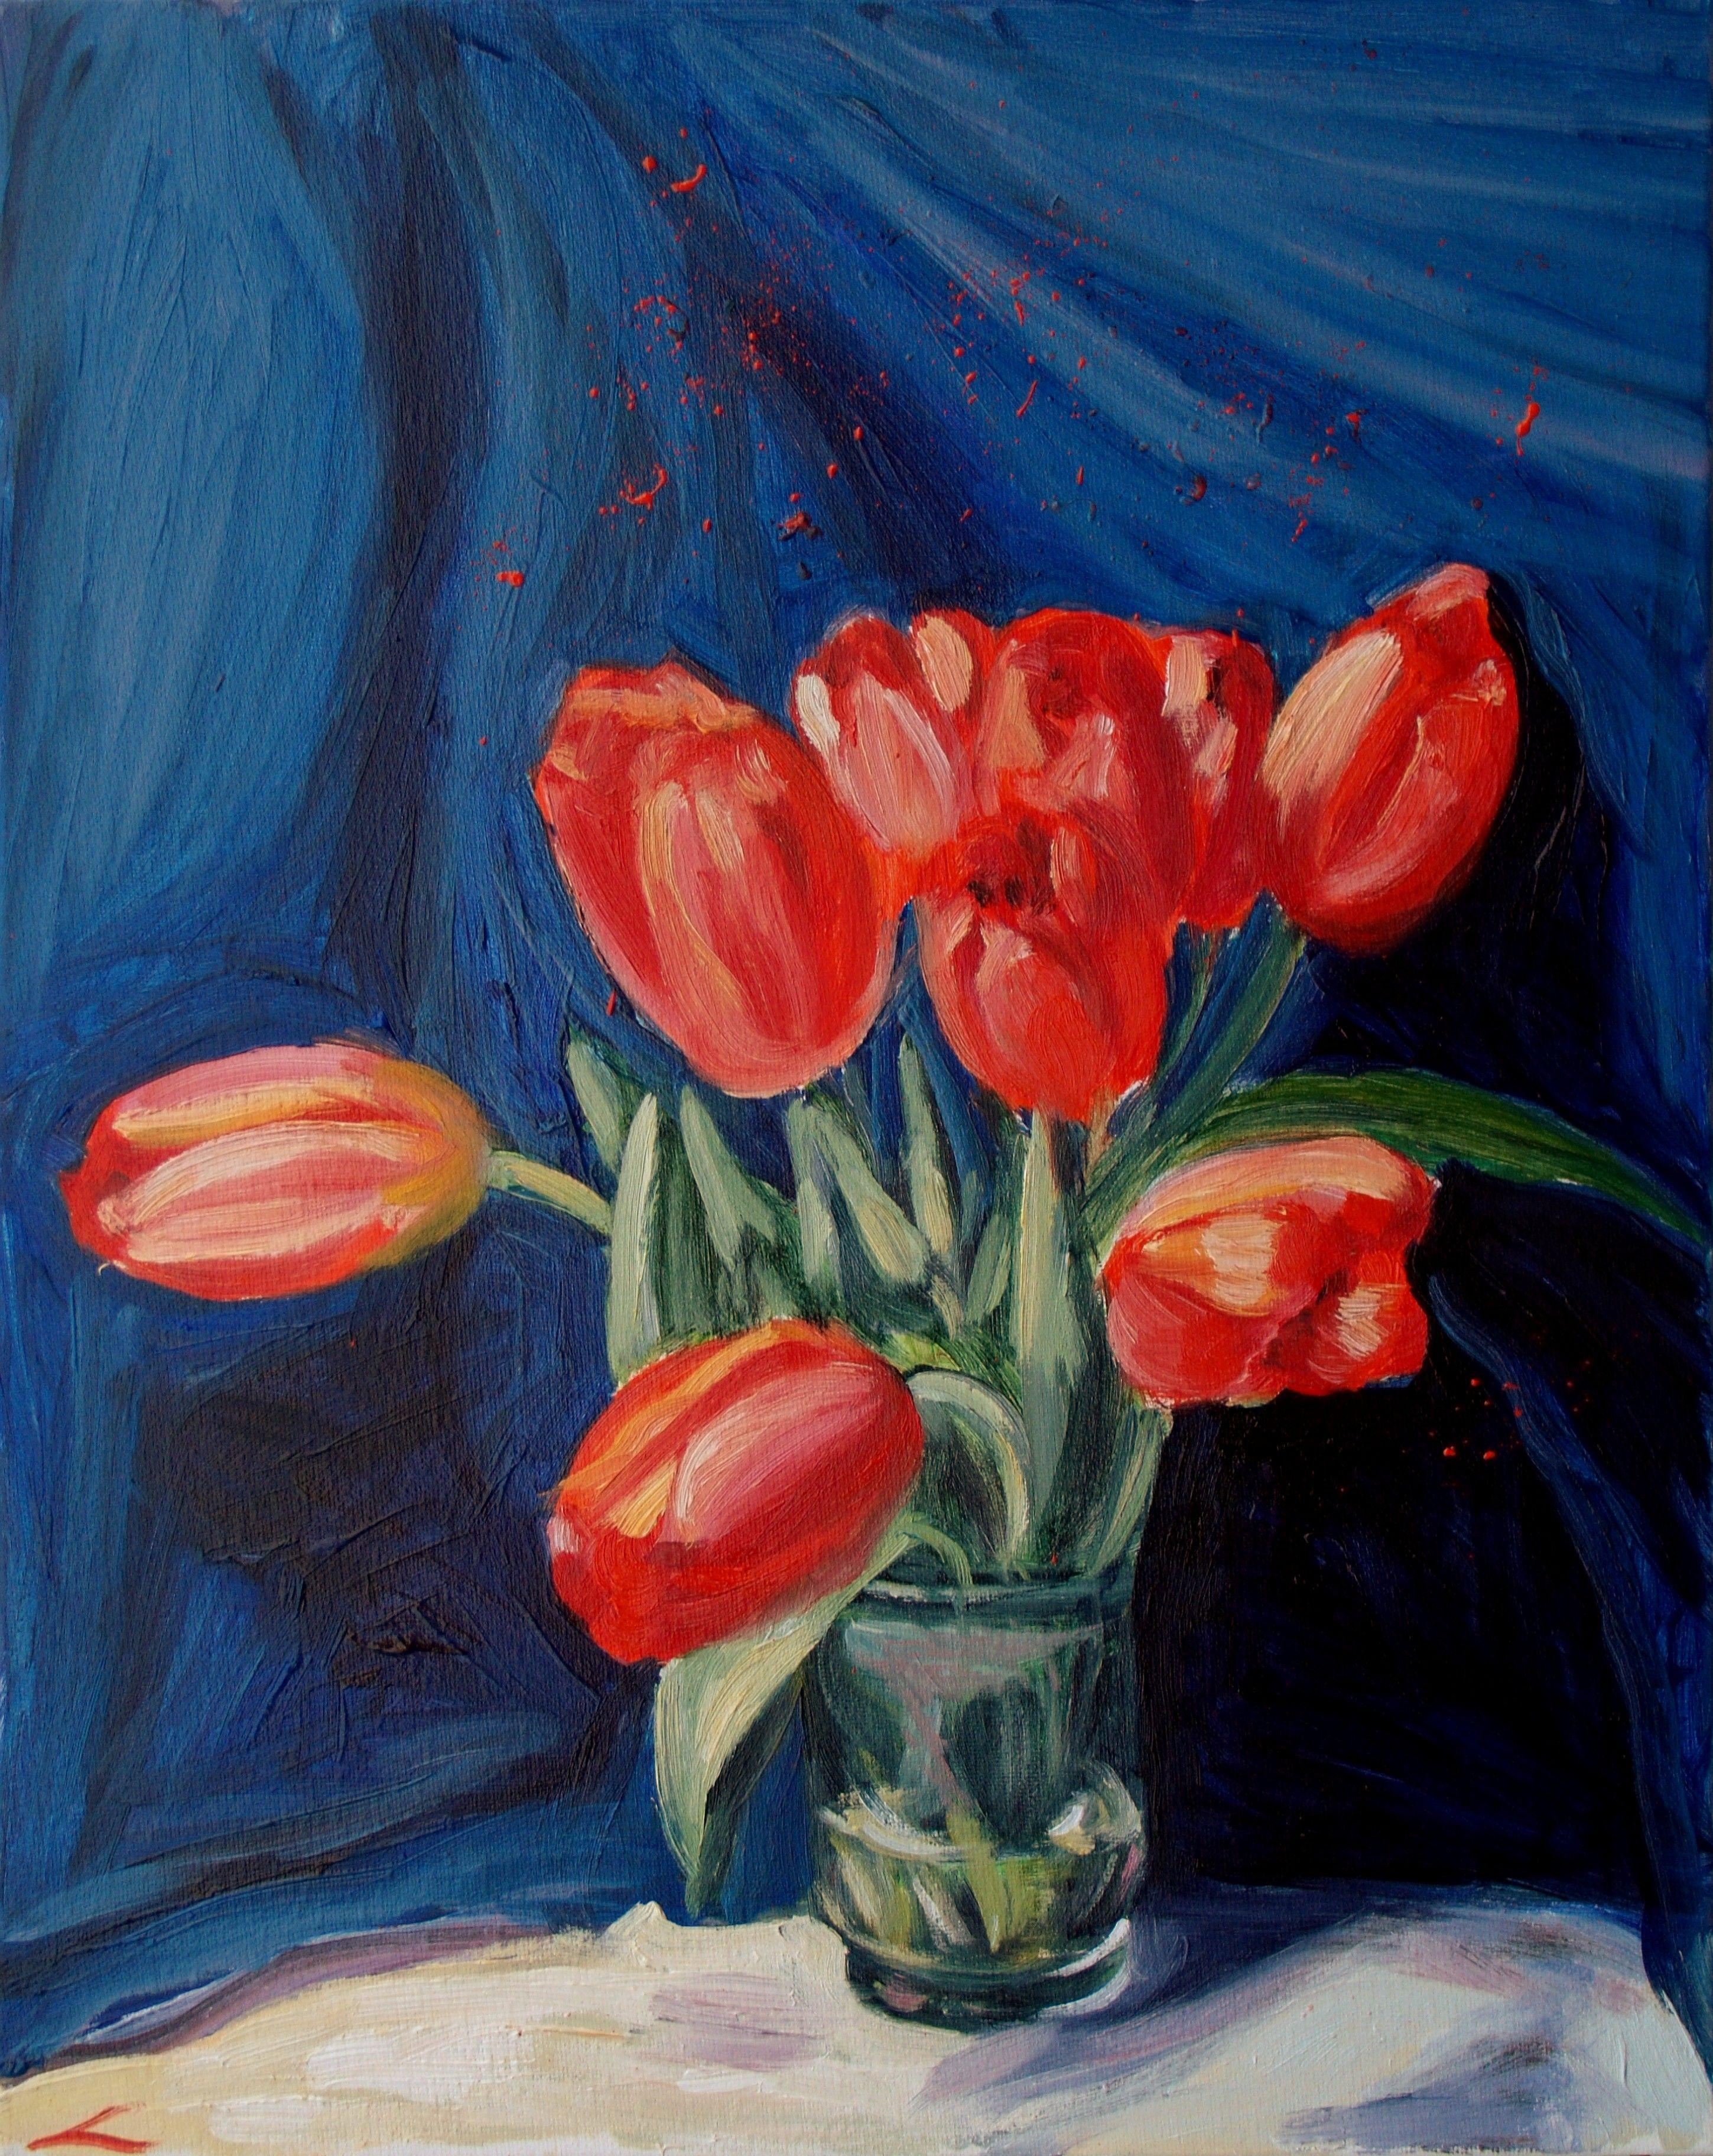 Peinture, huile sur toile, tulipes rouges - Painting de Elena Sokolova